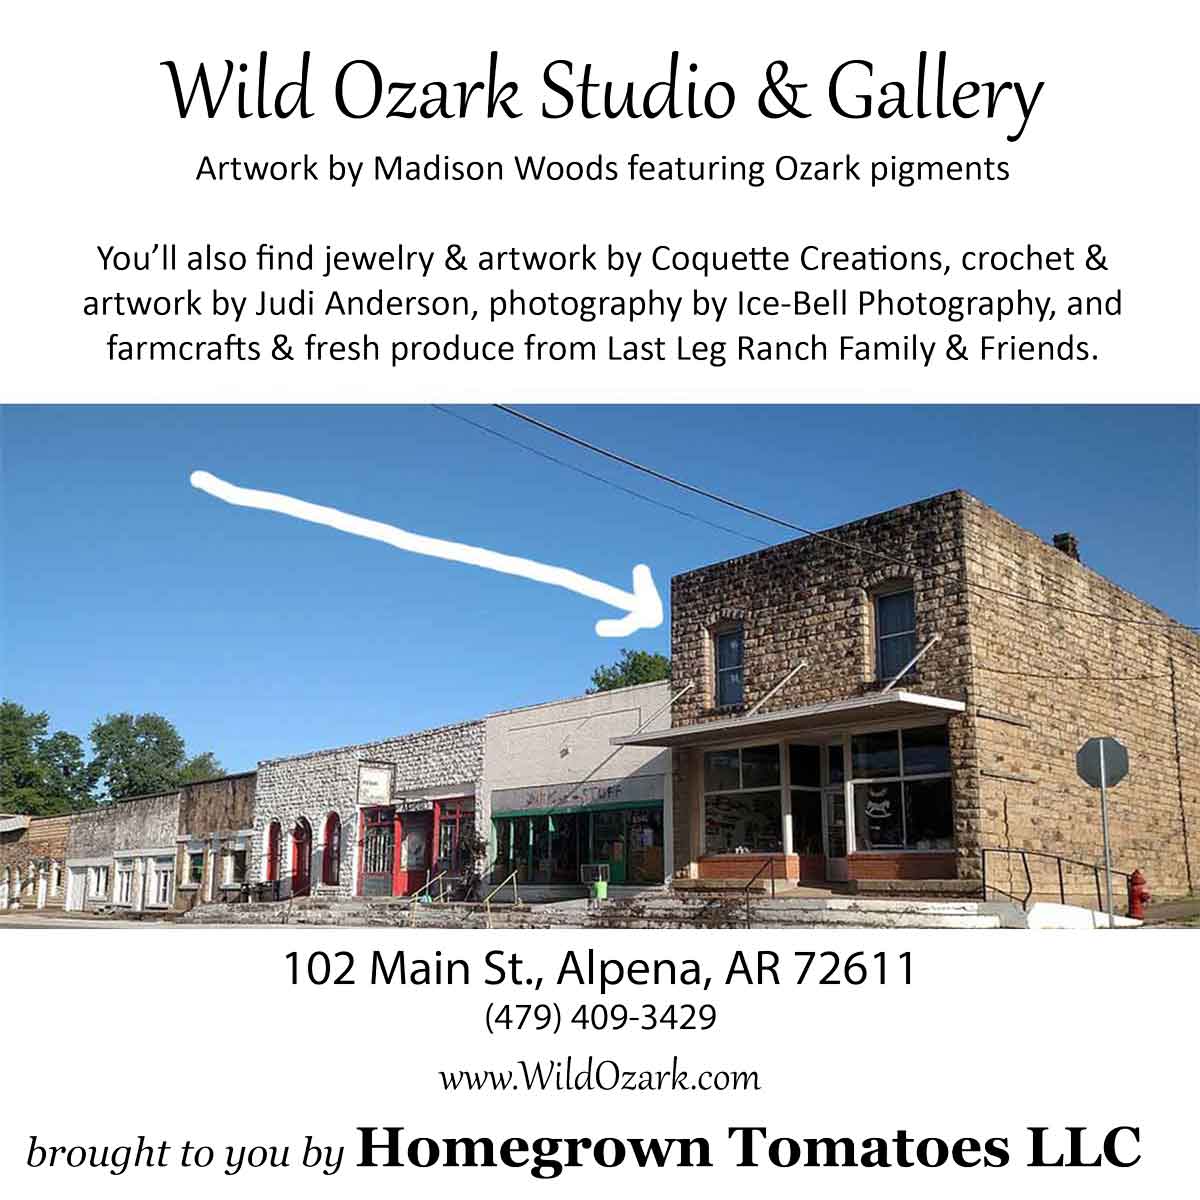 The new Wild Ozark studio location in Alpena, Arkansas.